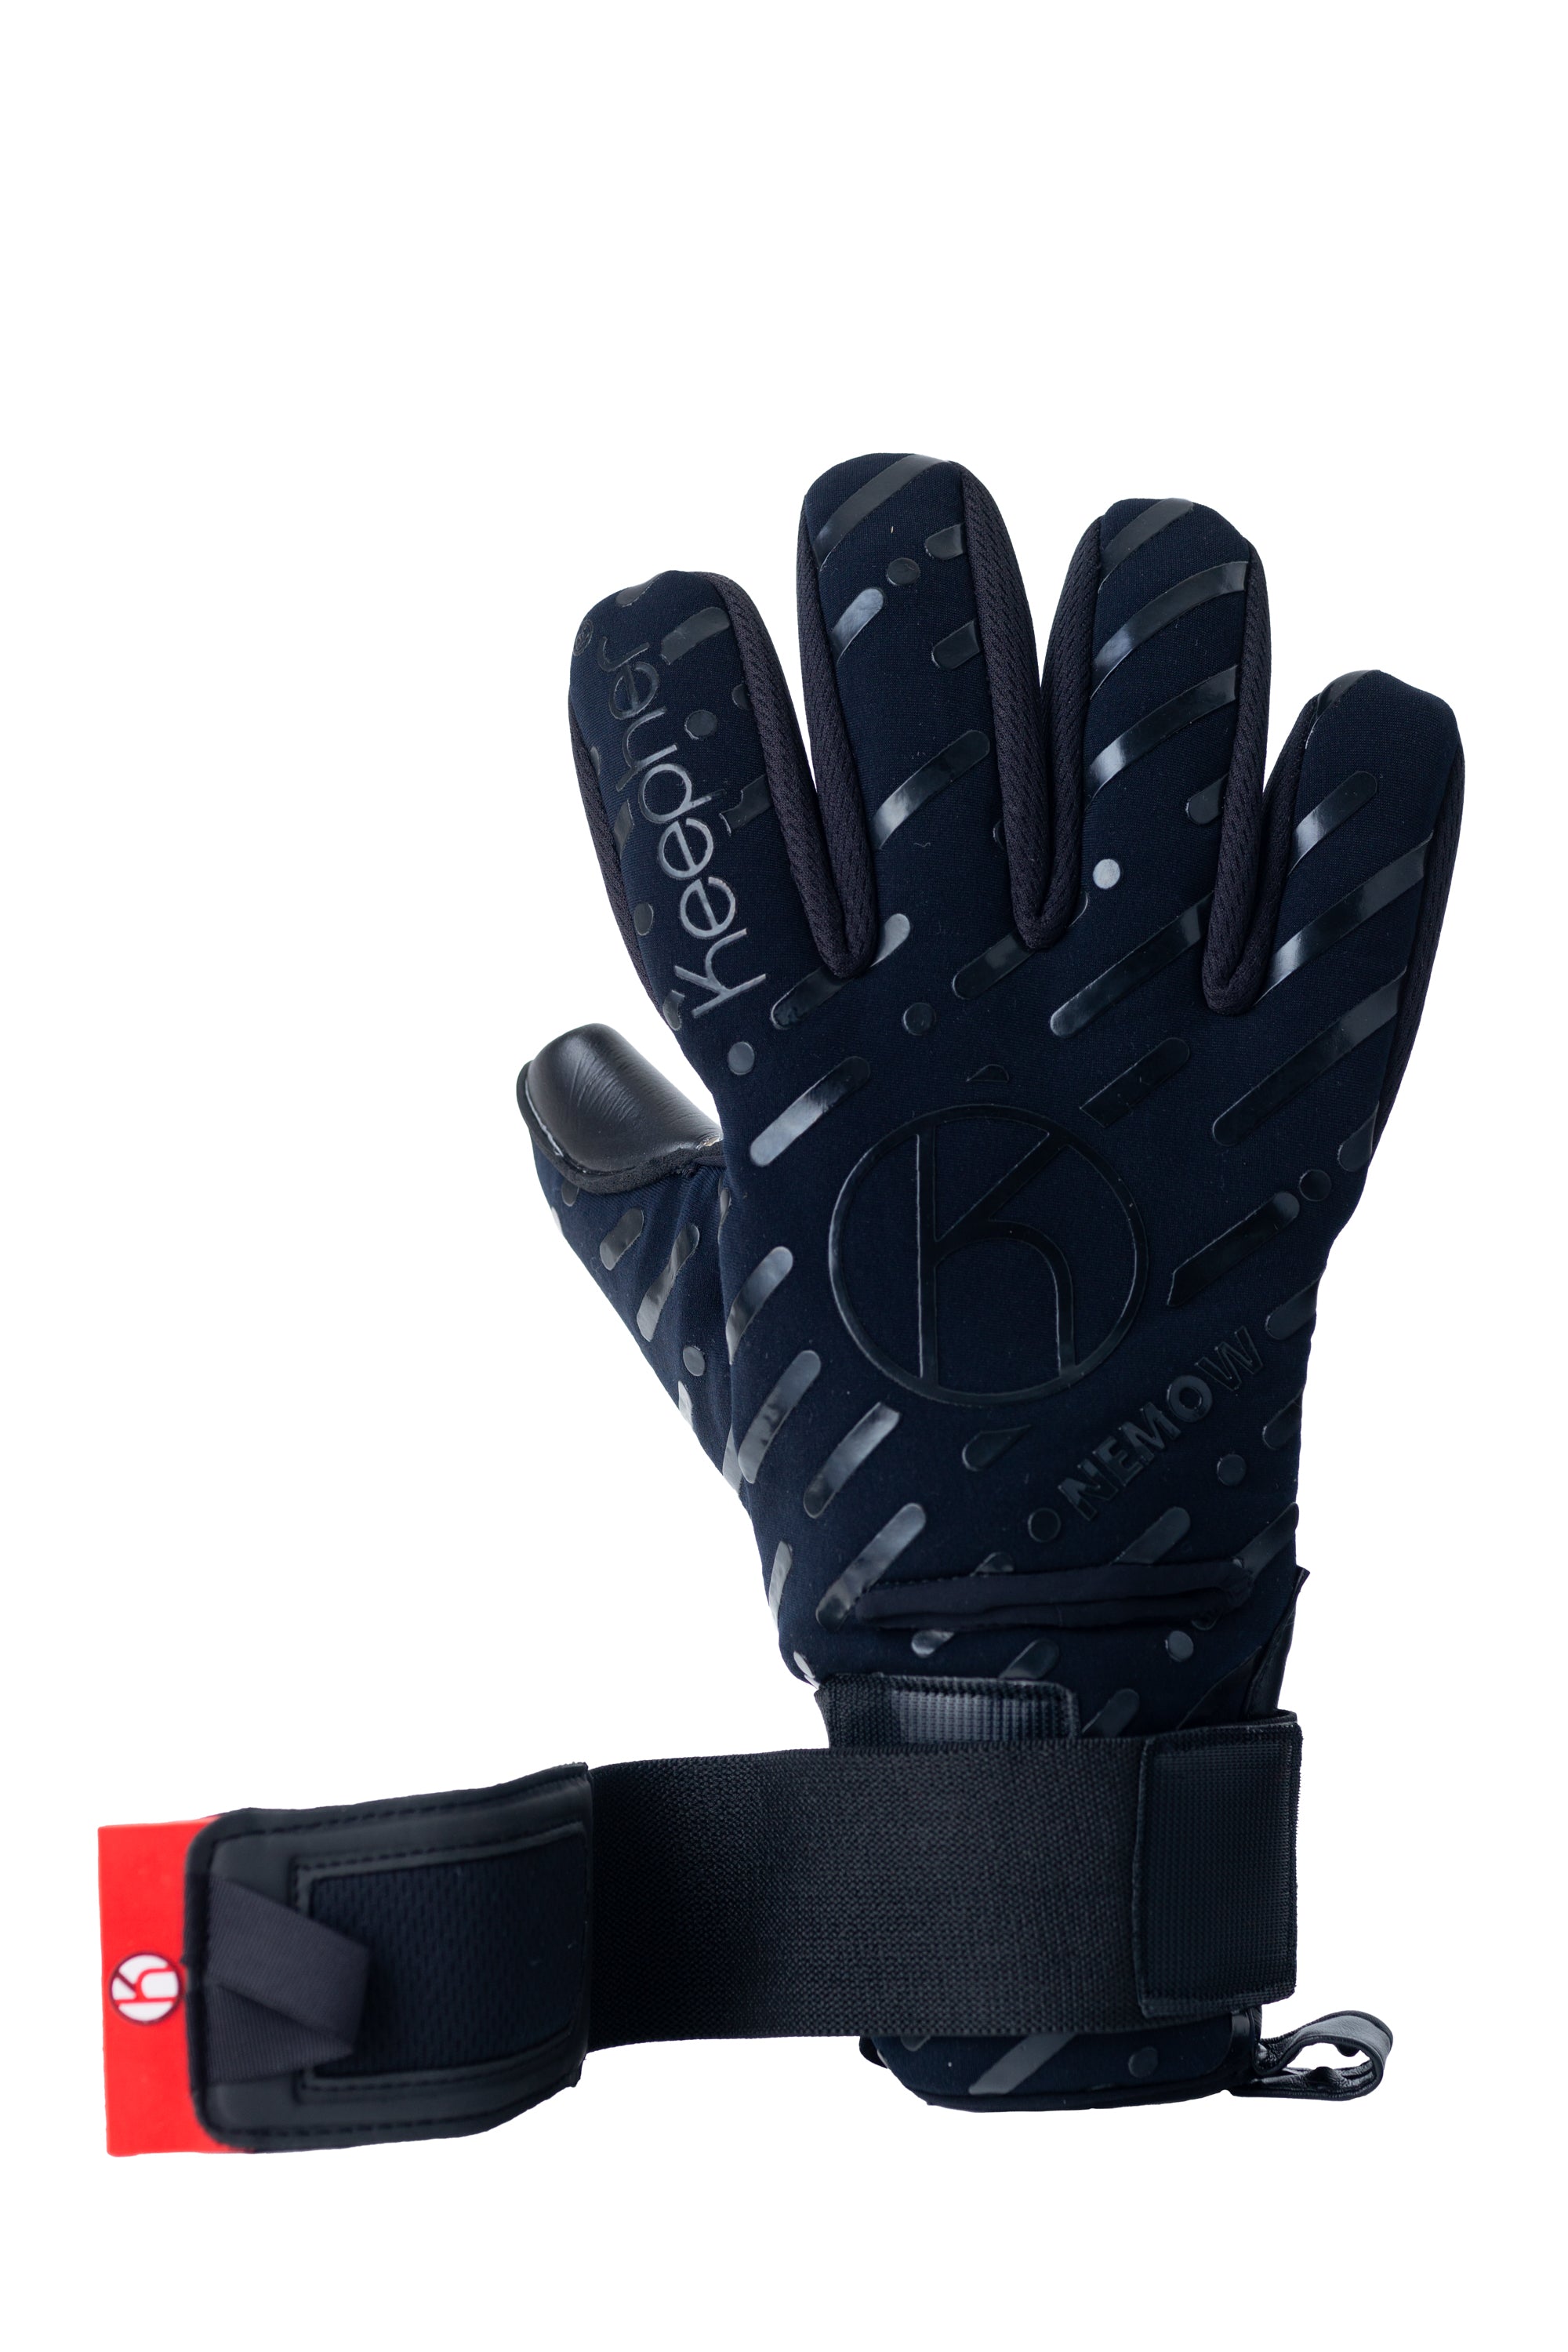 NEMOW Pro Match glove